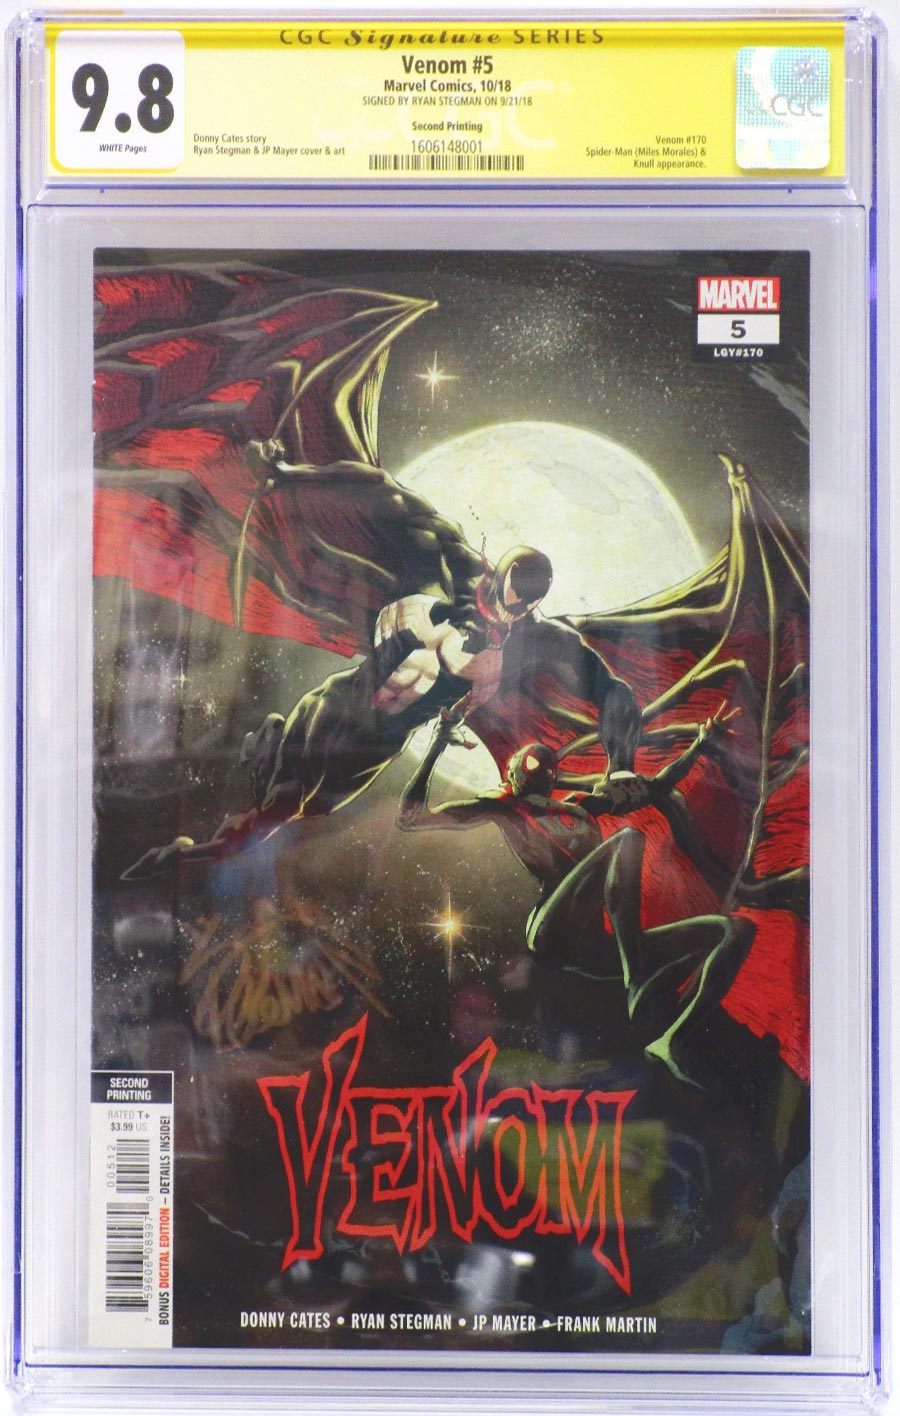 Venom Vol 4 #5 Cover D 2nd Ptg Variant Ryan Stegman Cover CGC Signature Series 9.8 Signed By Ryan Stegman